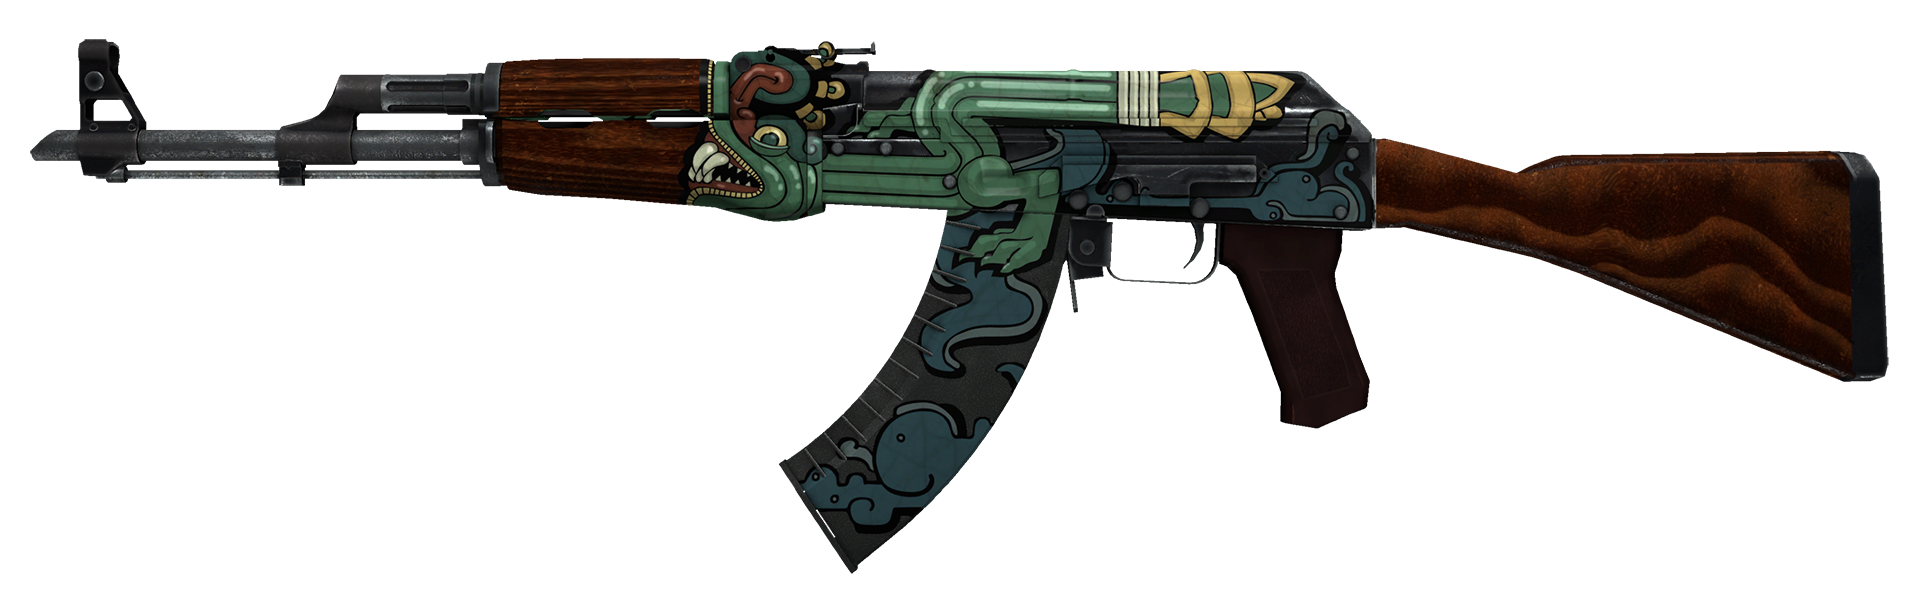 AK-47 Fire Serpent Large Rendering